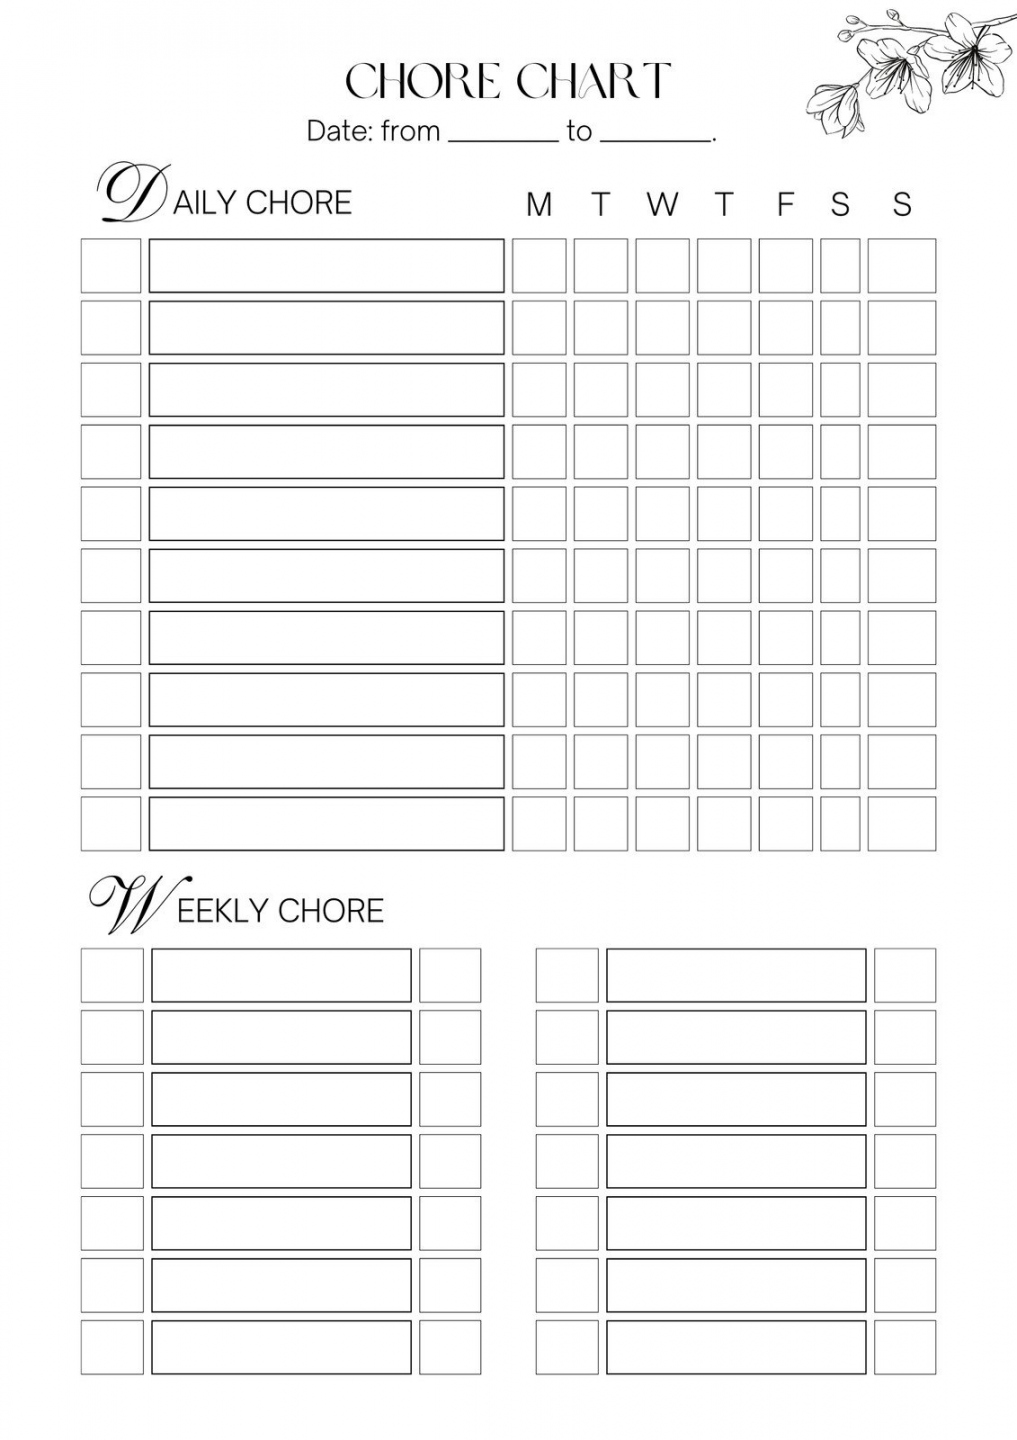 Free customizable chore chart templates to print  Canva - FREE Printables - Customizable Free Printable Chore Charts